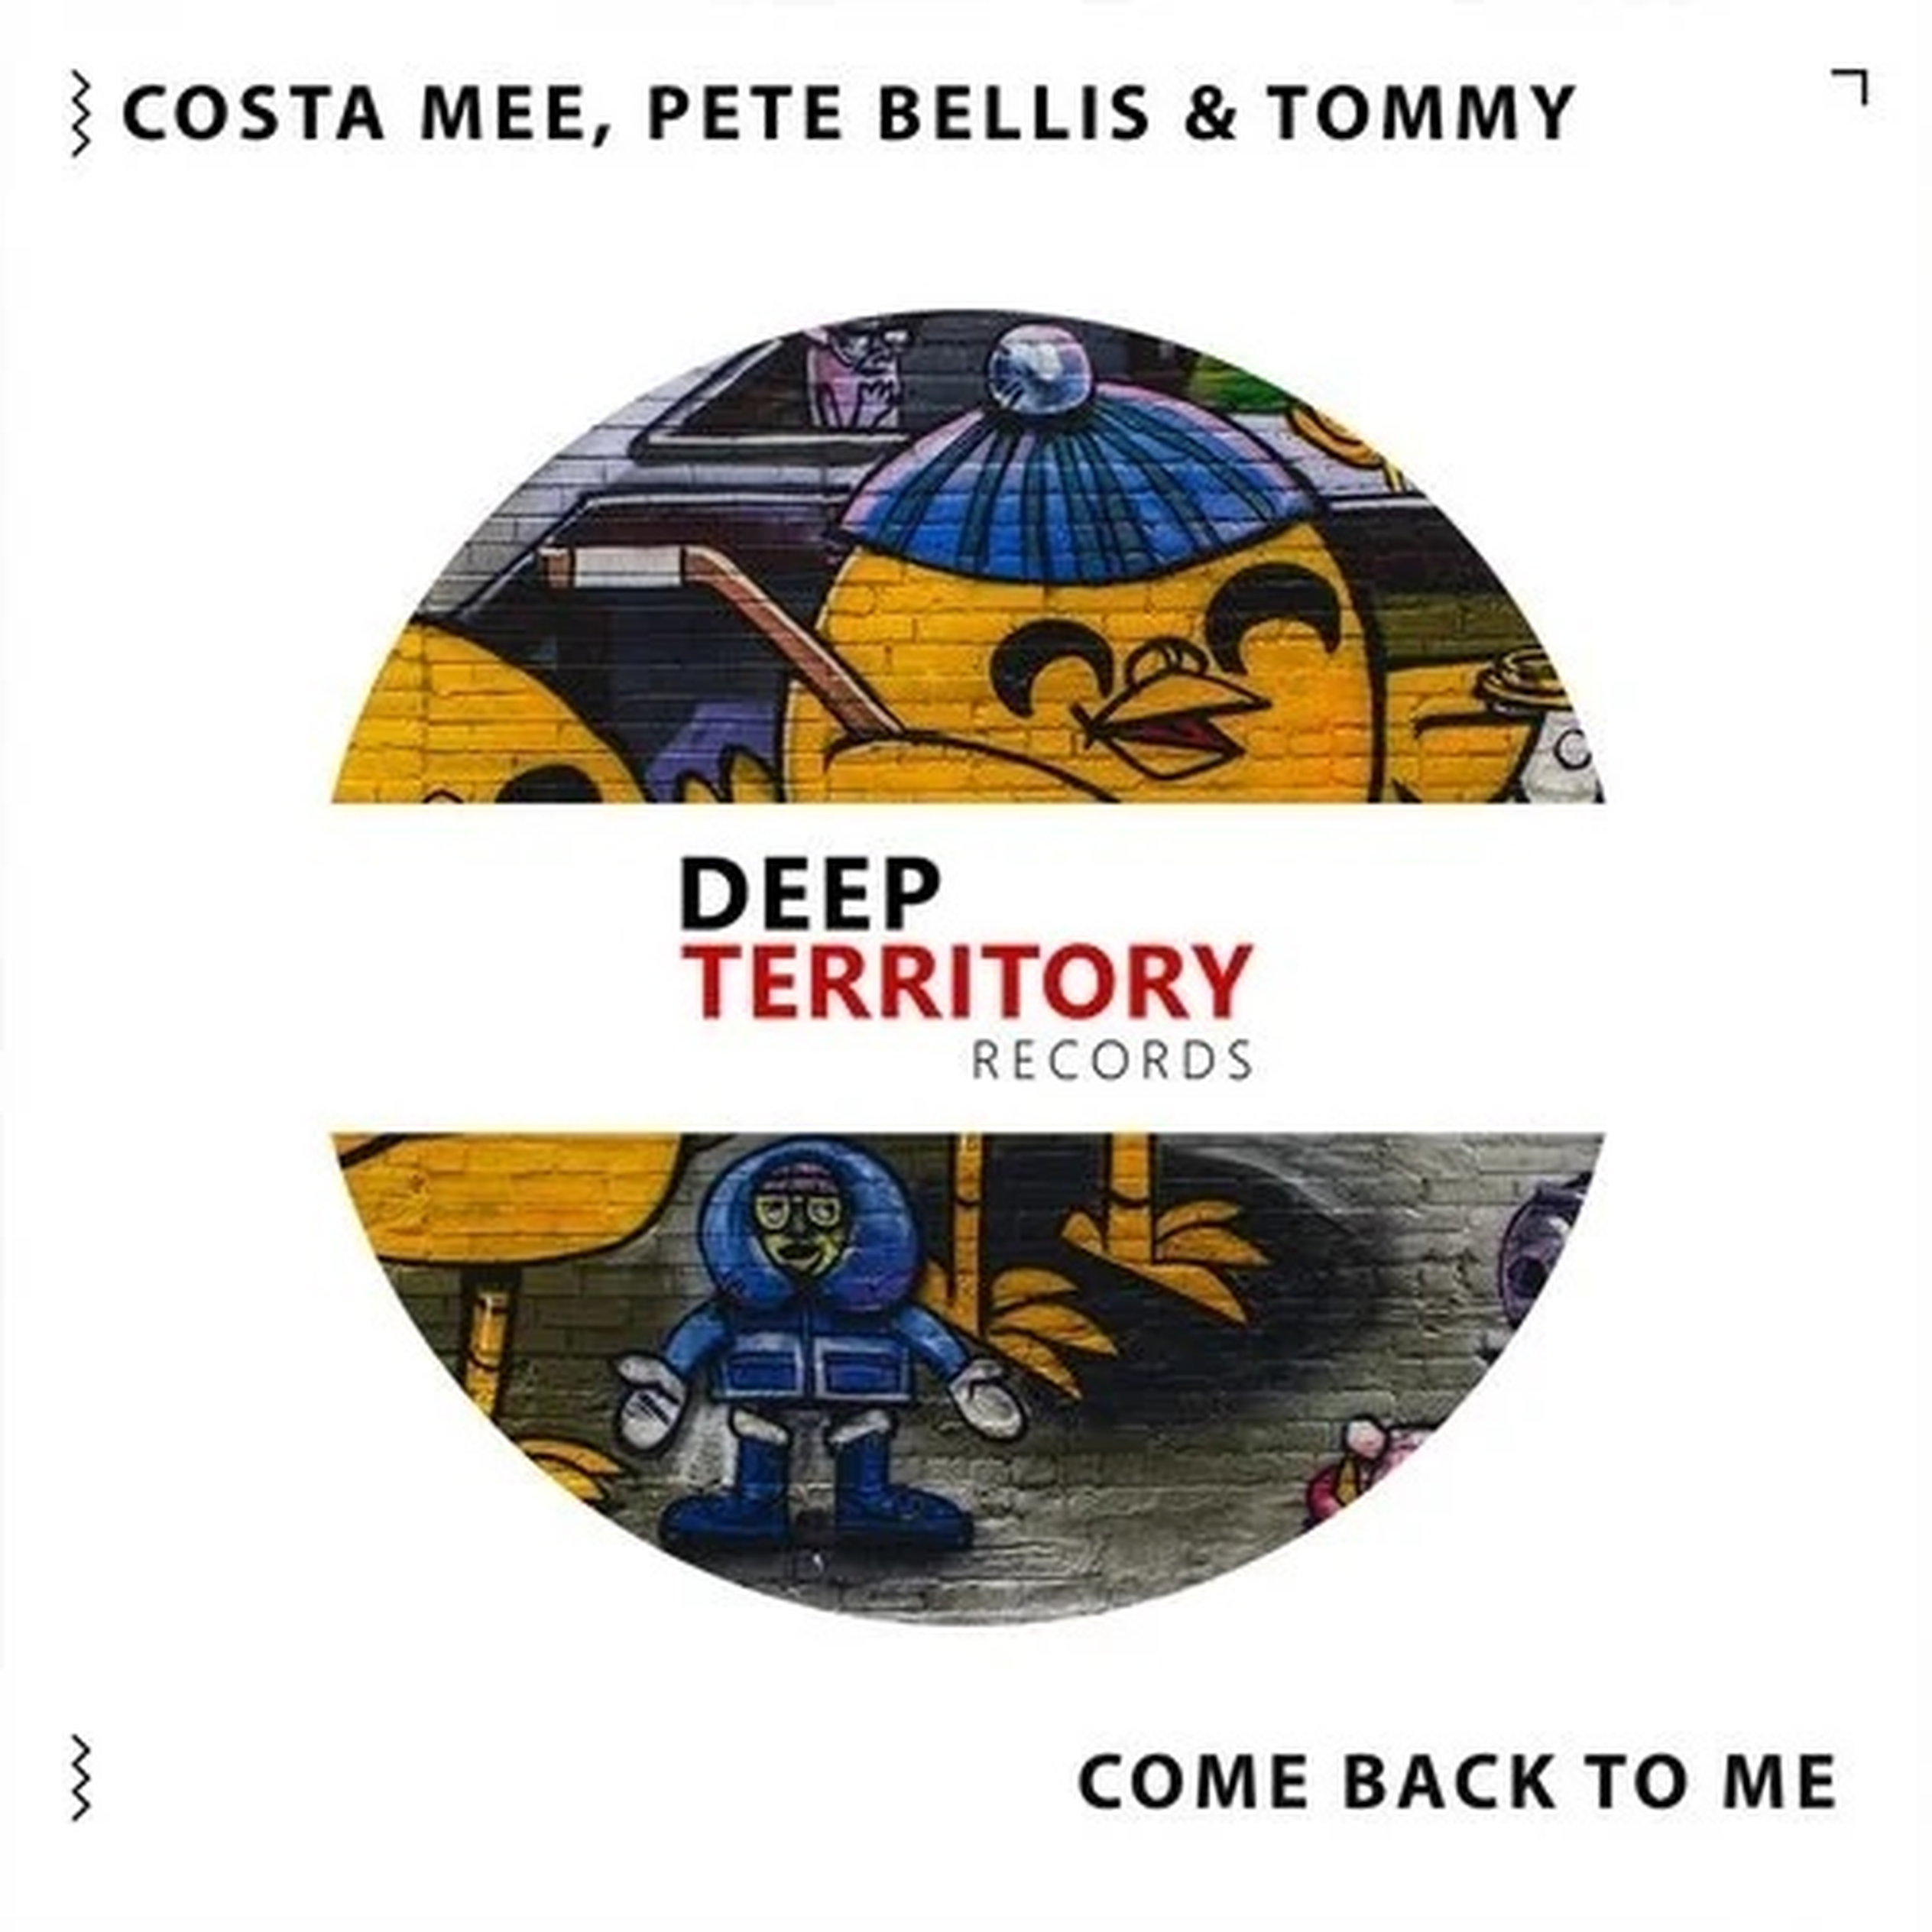 Costa me pete bellis tommy. Costa mee & Pete Bellis. Pete Bellis & Tommy. Costa mee Pete Bellis Tommy come back to me Original Mix. Pete Bellis Deep Territory.